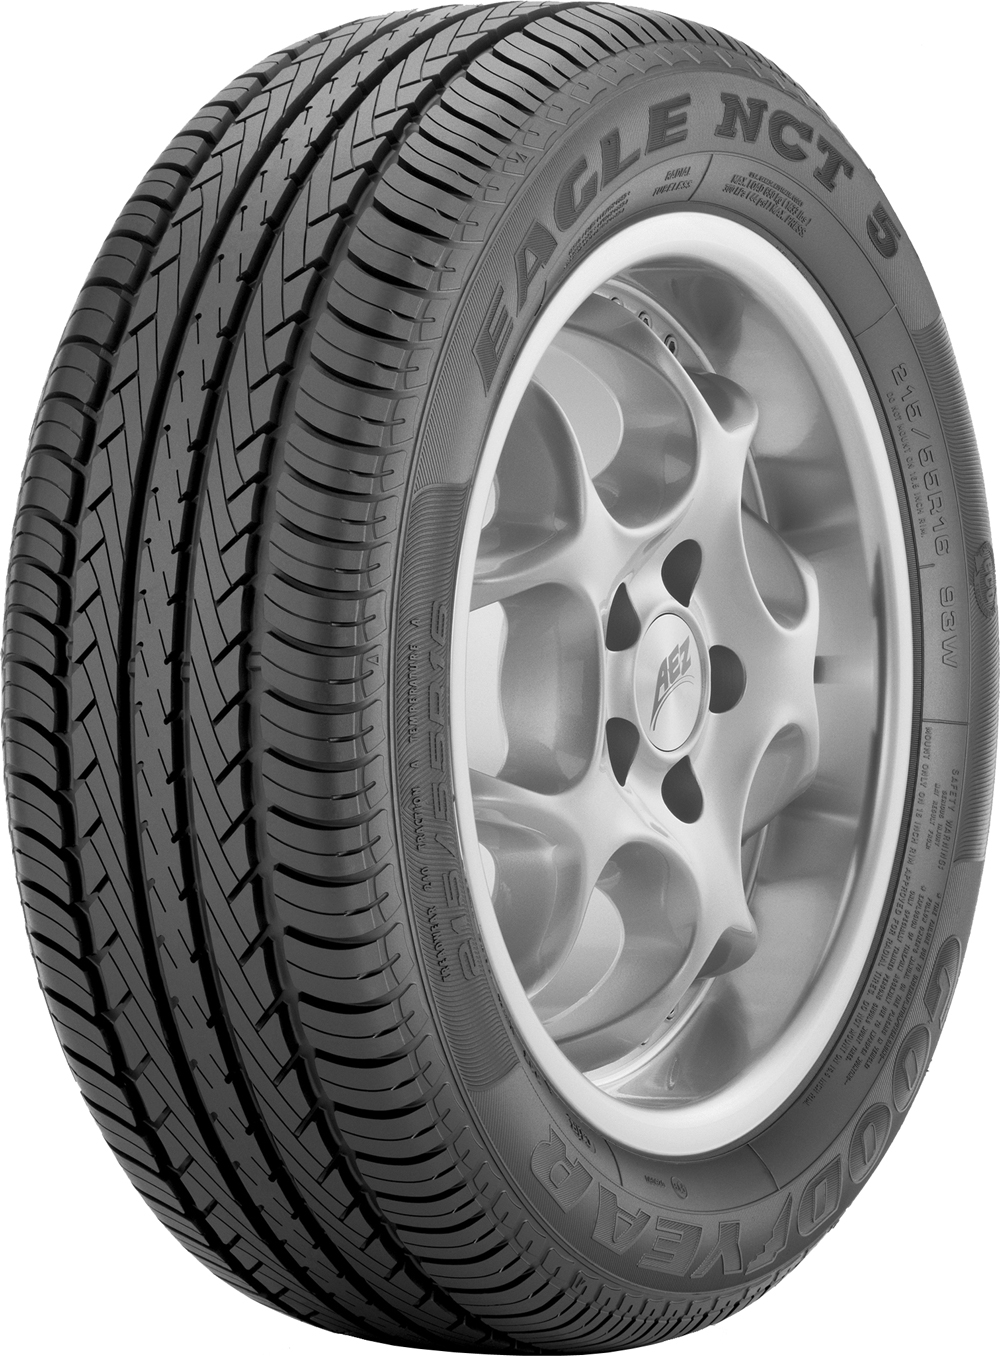 Автомобилни гуми GOODYEAR EAGLE NCT5 RFT BMW FP 285/45 R21 109